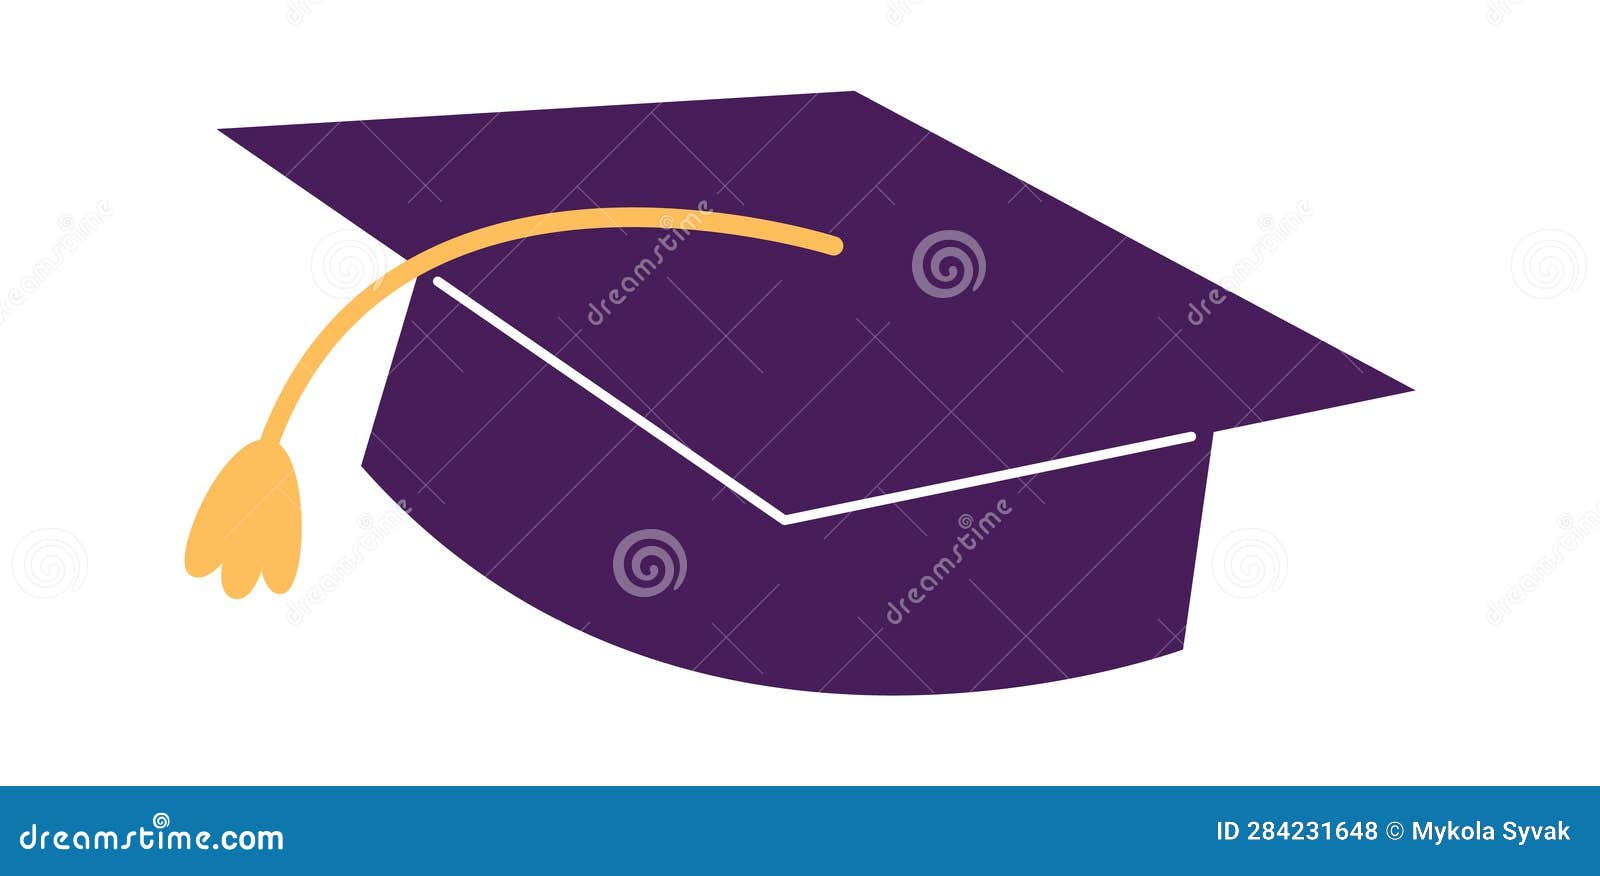 Graduation Study Hat stock vector. Illustration of vector - 284231648